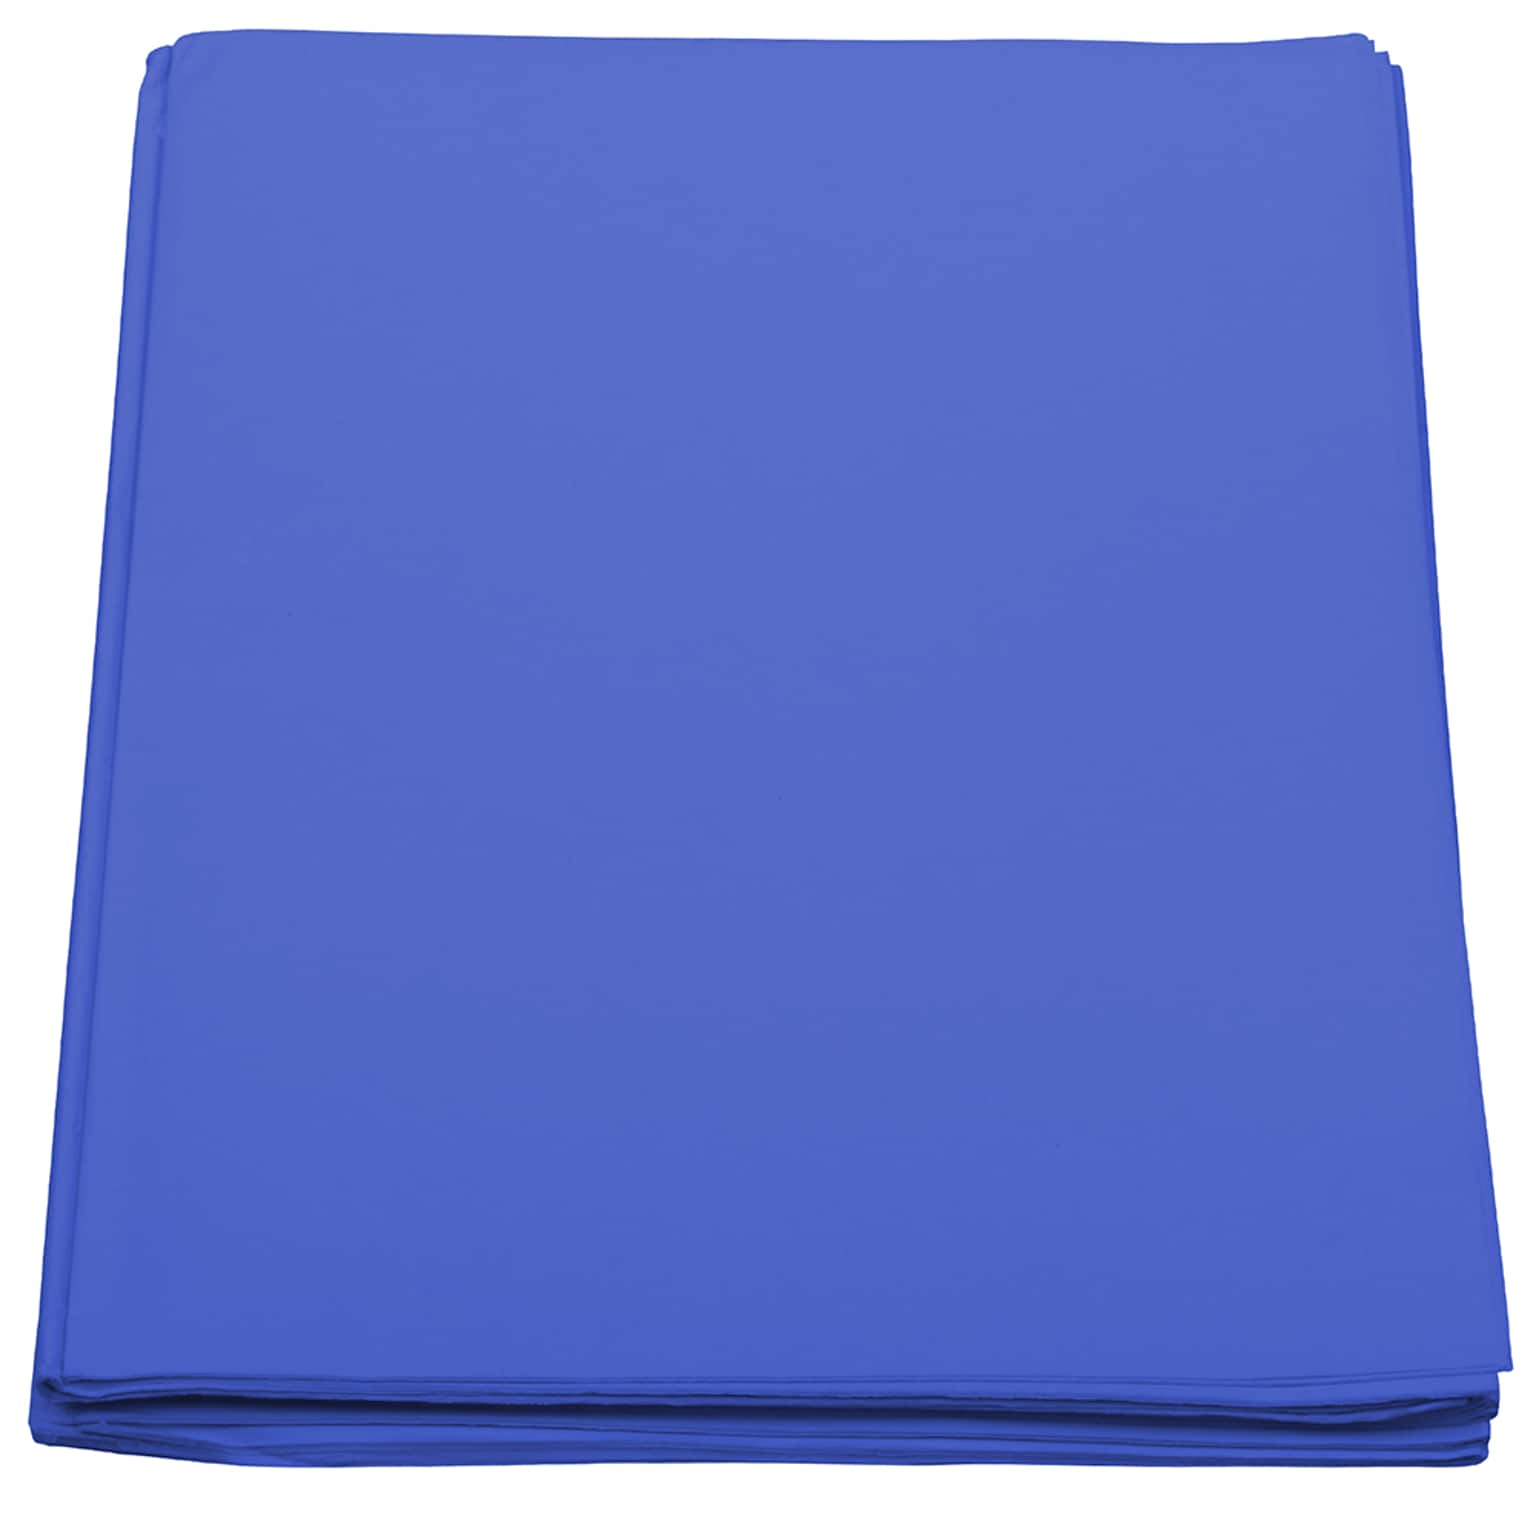 JAM Paper Tissue Paper, Presidential Blue, 480 Sheets/Pack (1155679)